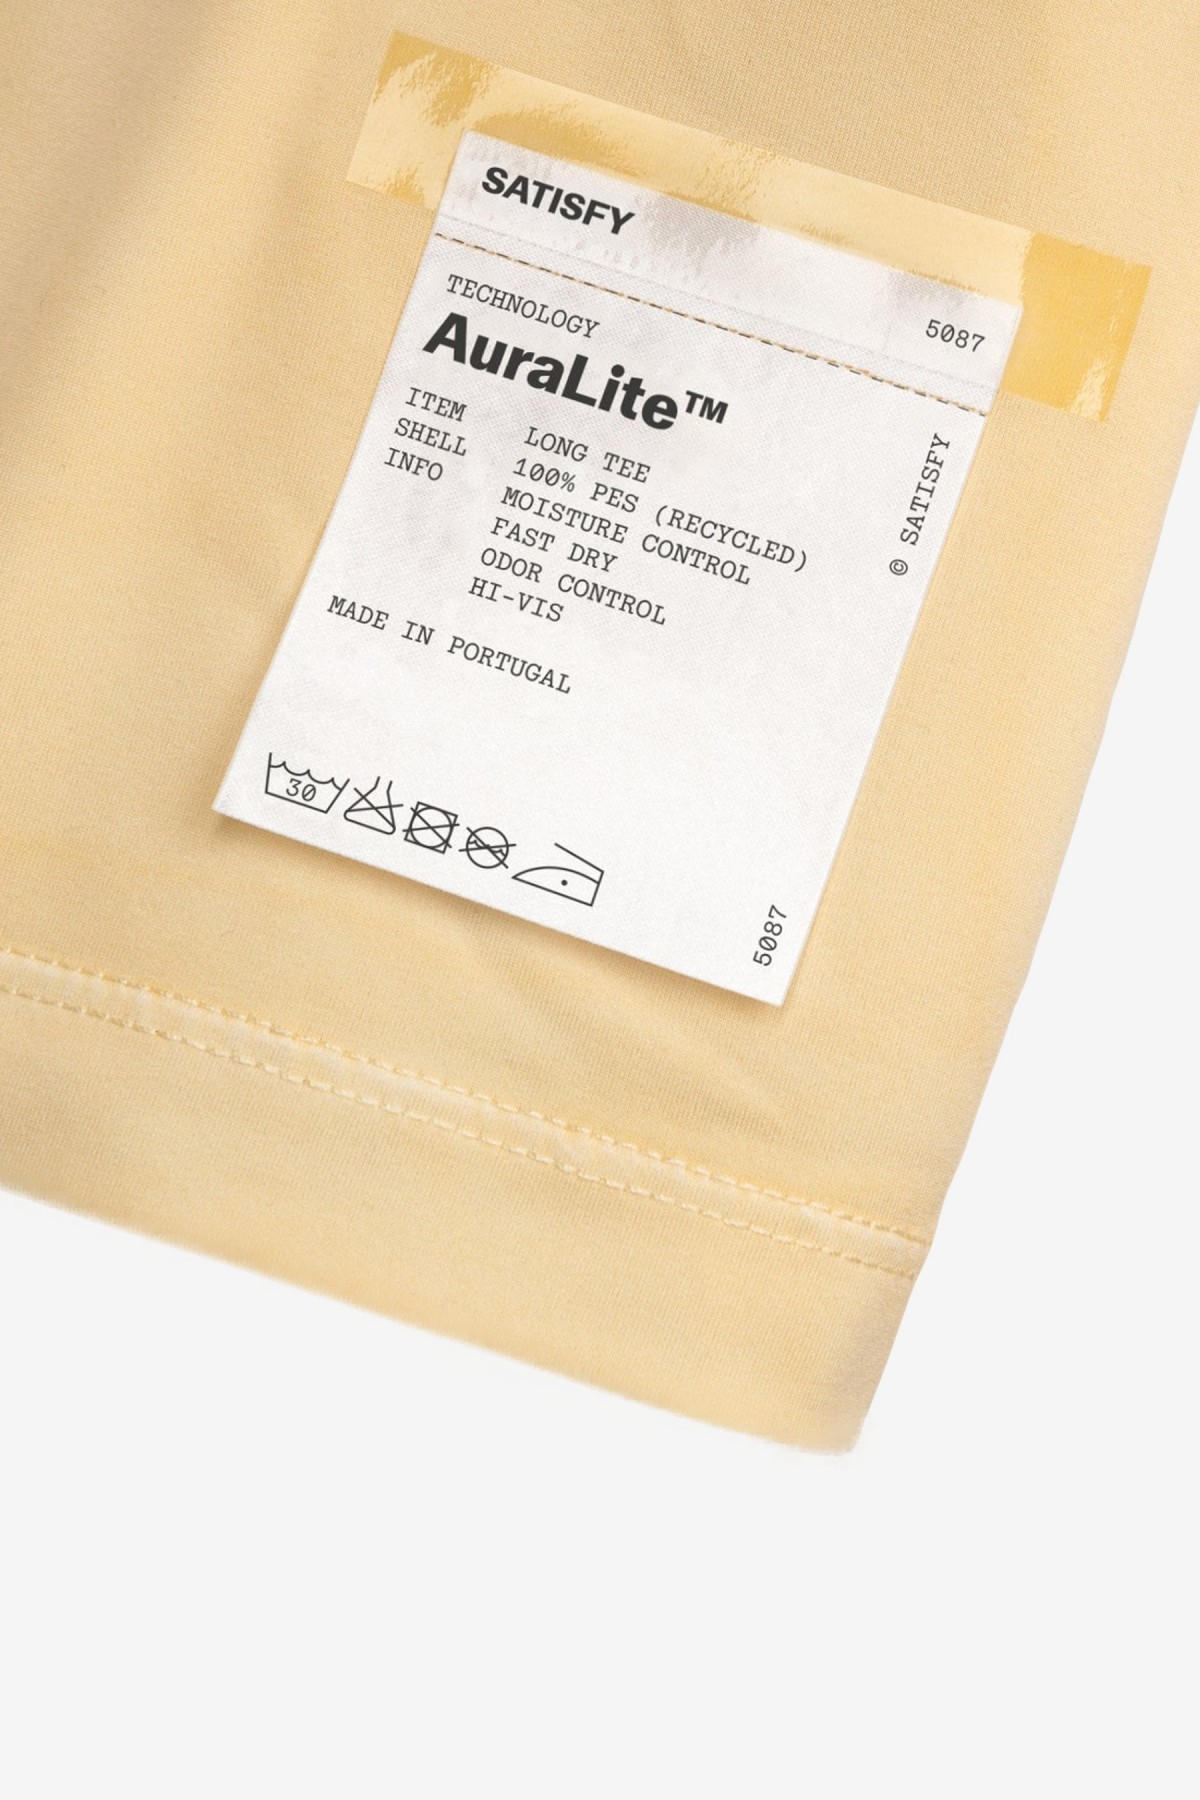 Satisfy Running AuraLite Long Tee in Mineral yellow